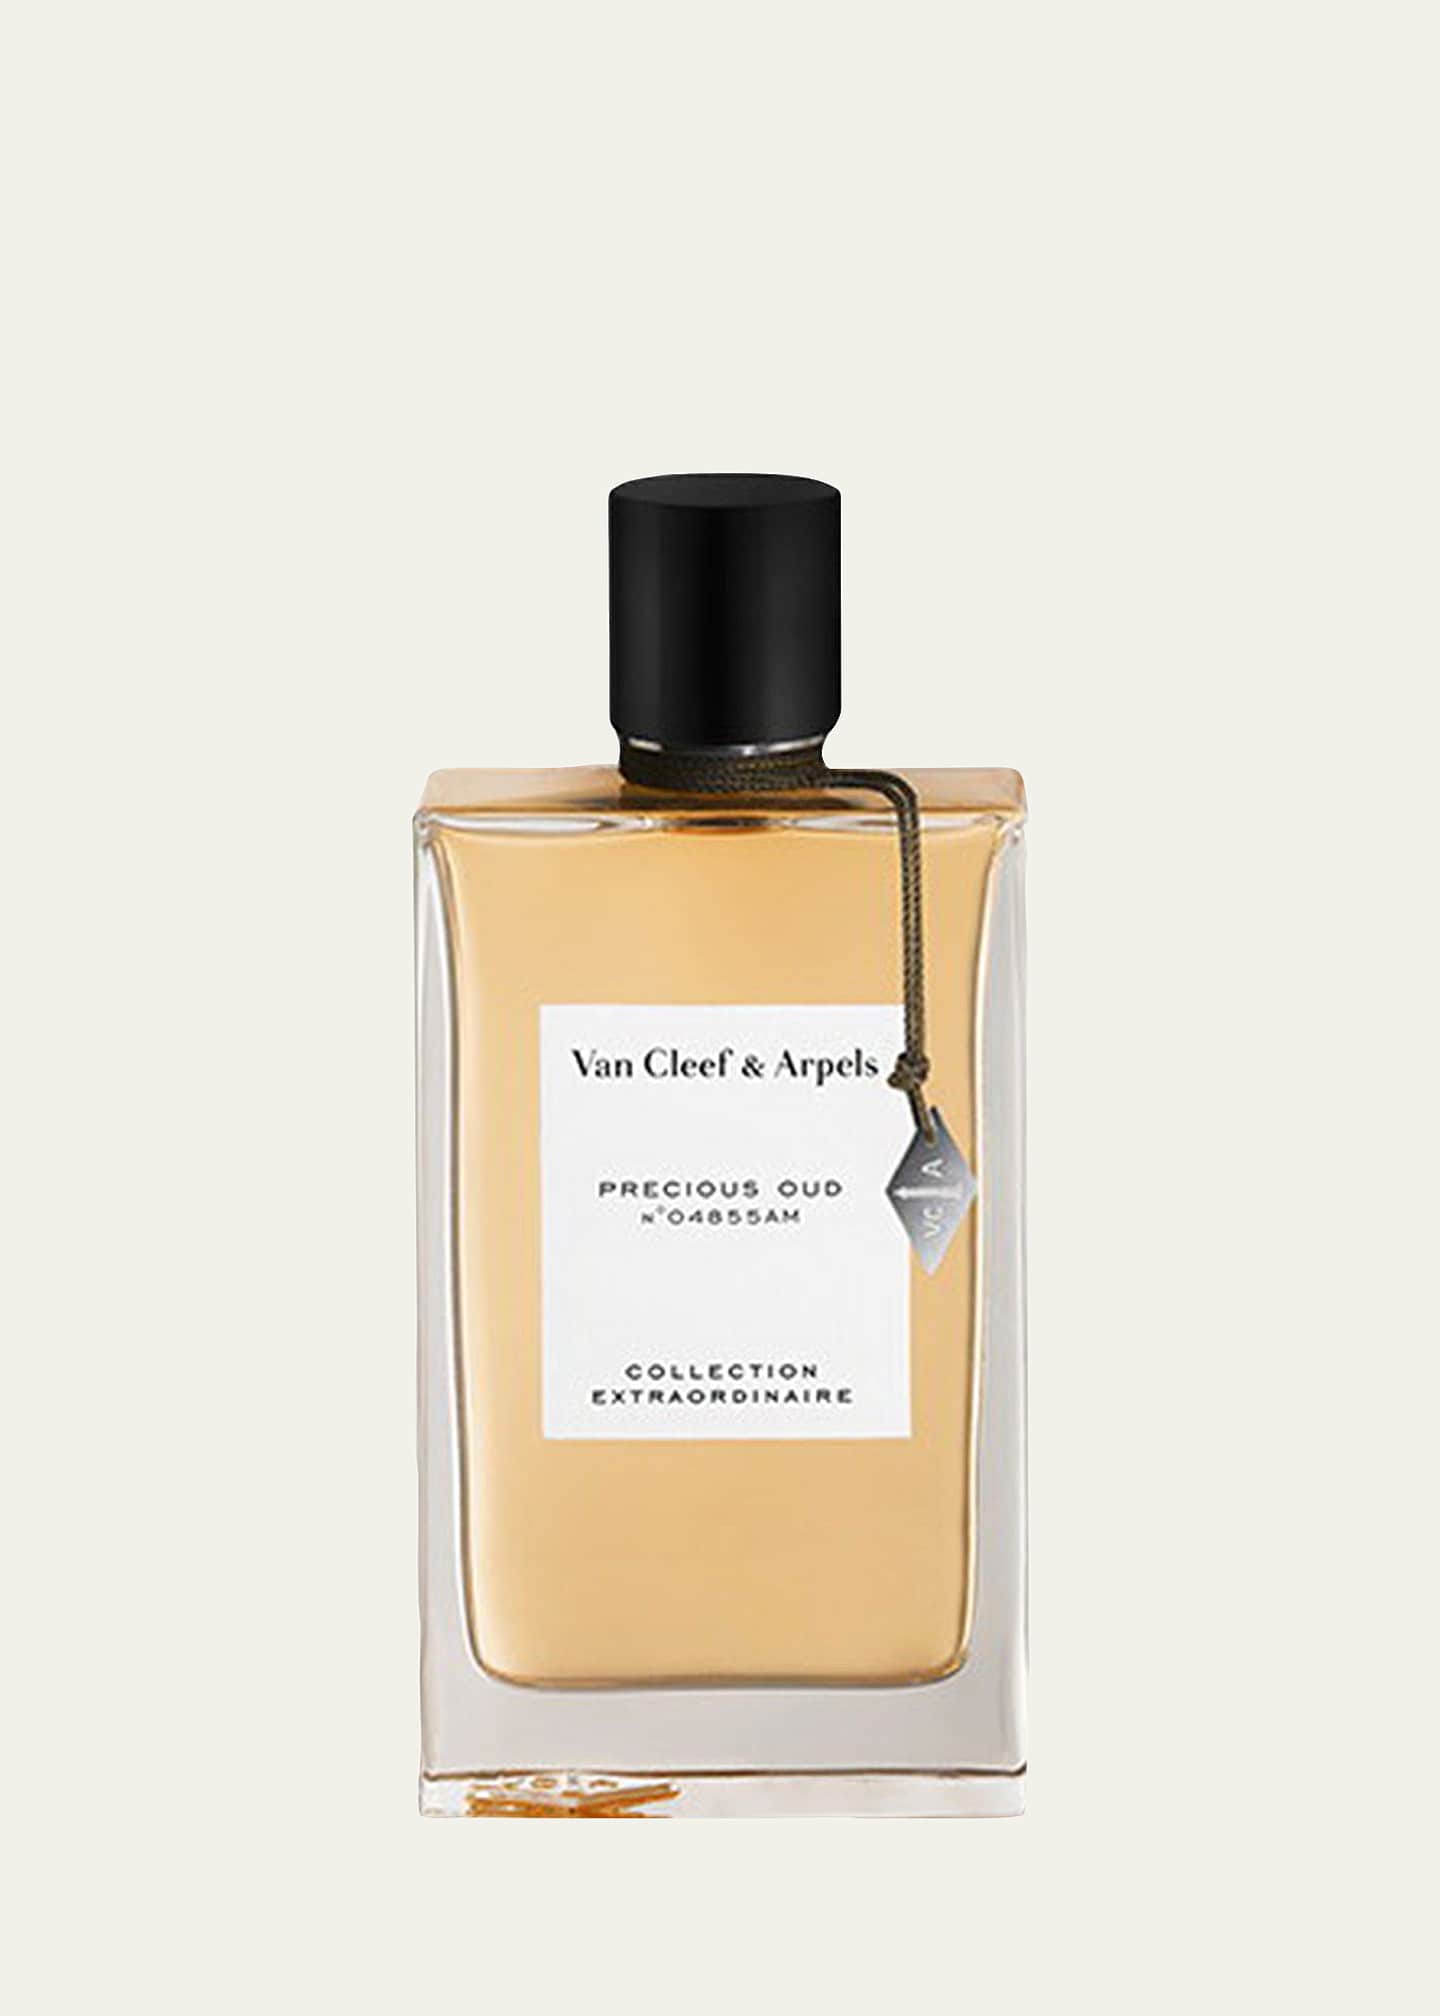 Van Cleef & Arpels Exclusive Precious Oud Eau de Parfum, 2.5 oz.